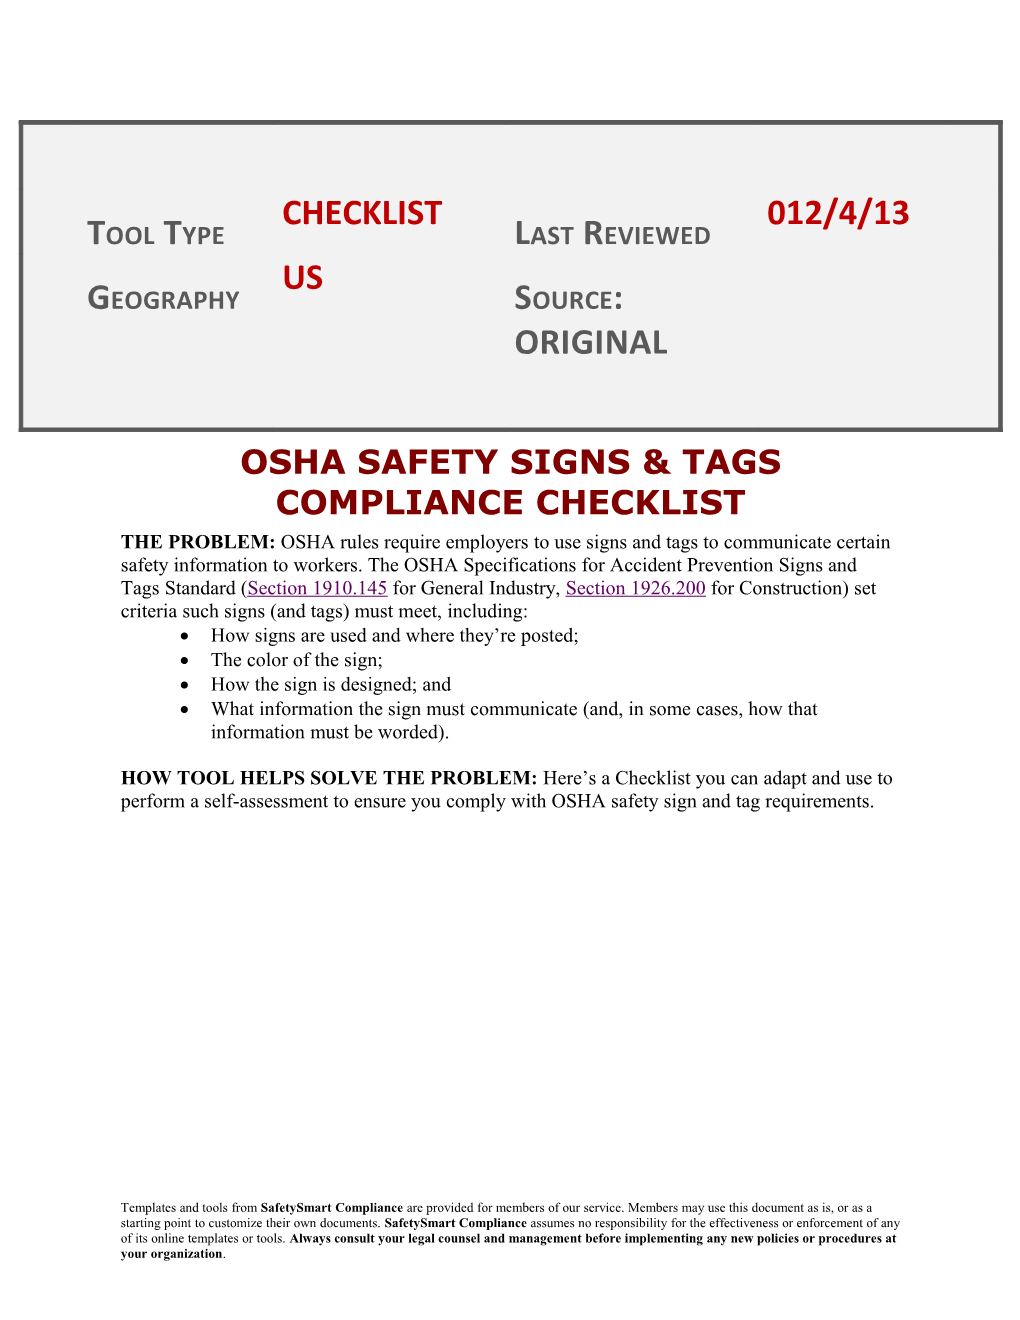 Osha Safety Signs & Tagscompliance Checklist